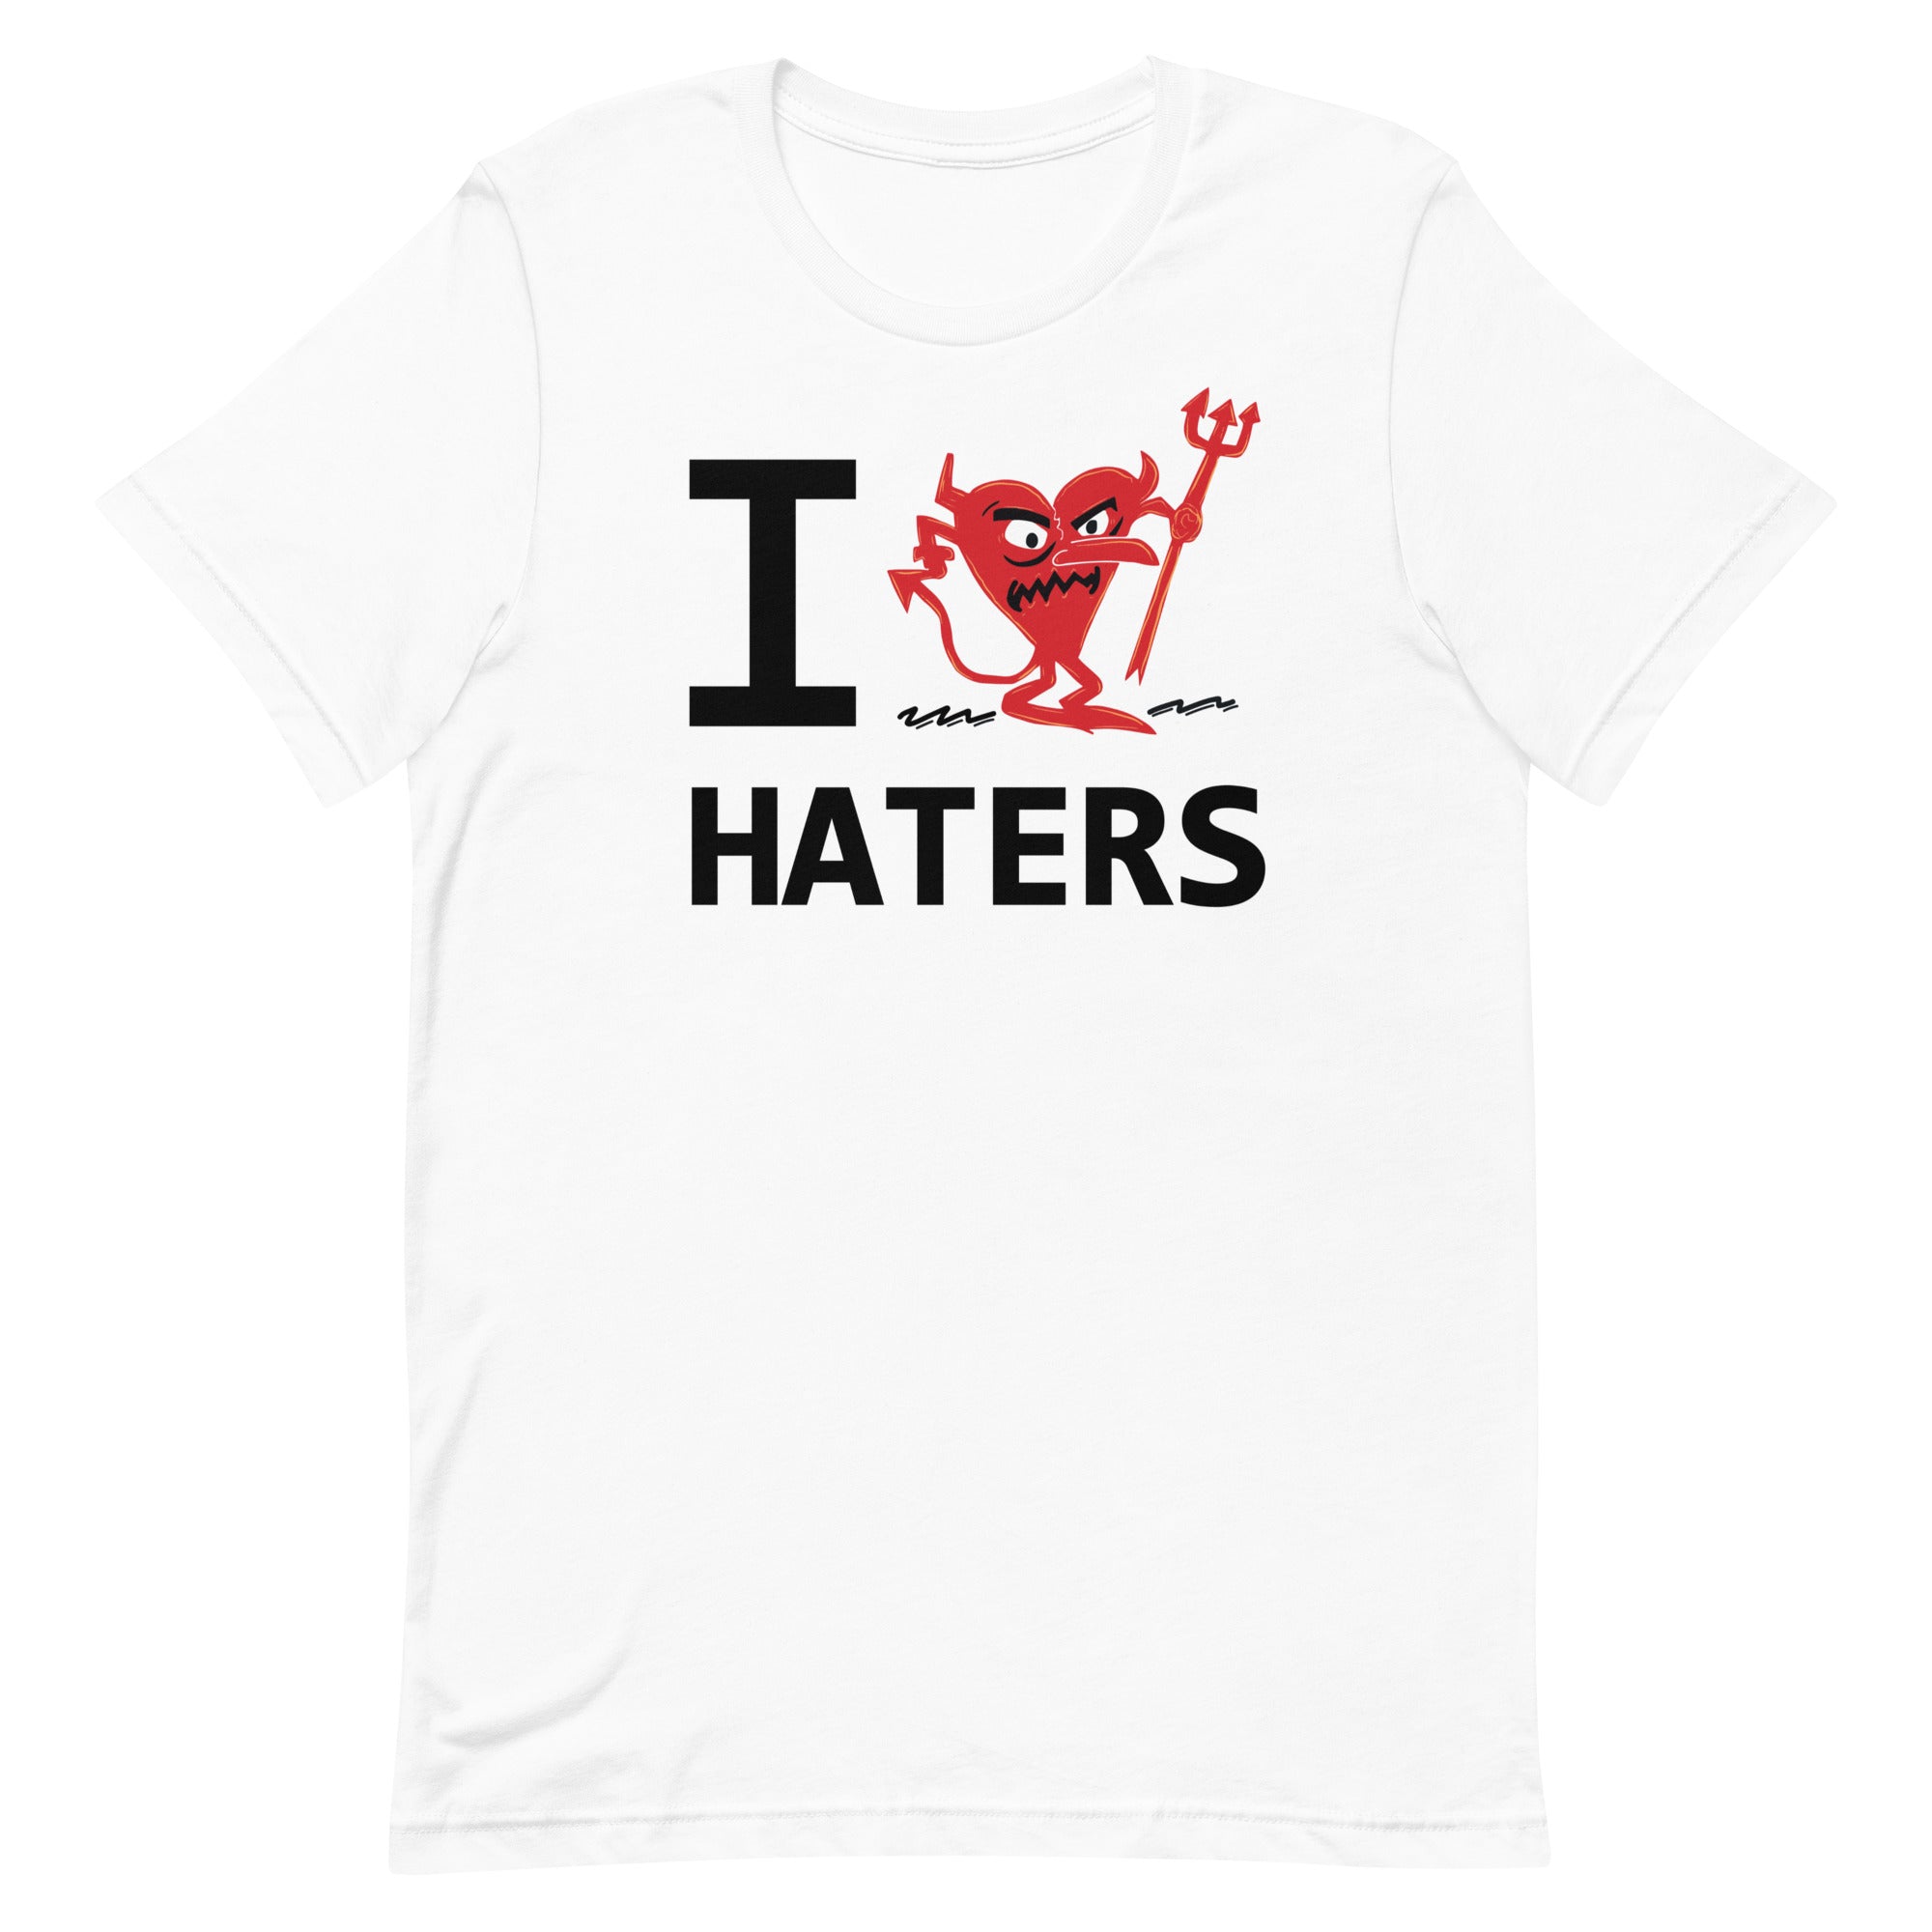 HATERS Unisex t-shirt